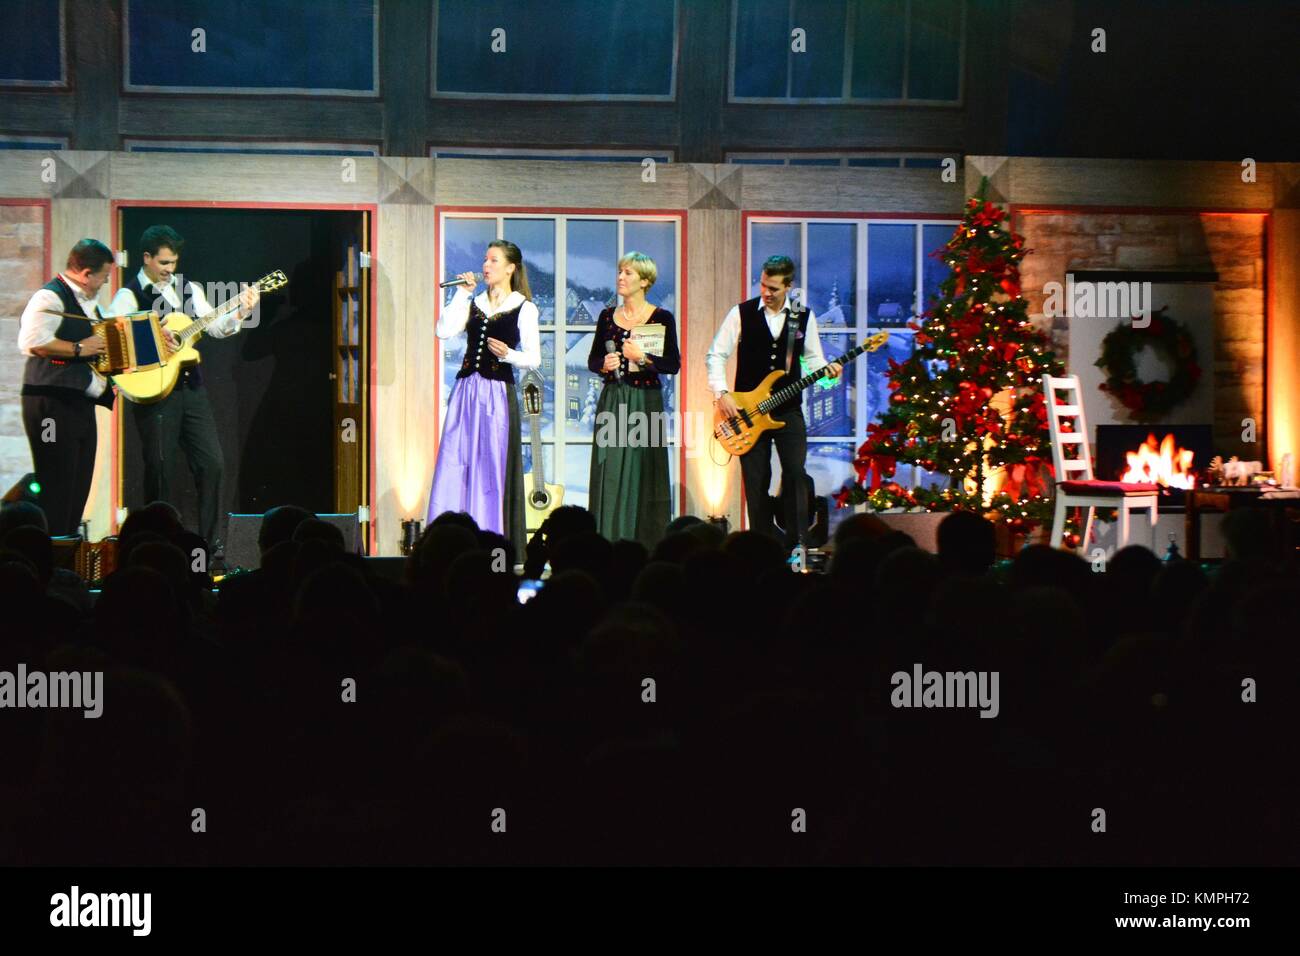 Rust, Germany. 07th Dec, 2017. Show 'Weihnacht mit Stefan' Credit: mediensegel/Alamy Live News Stock Photo